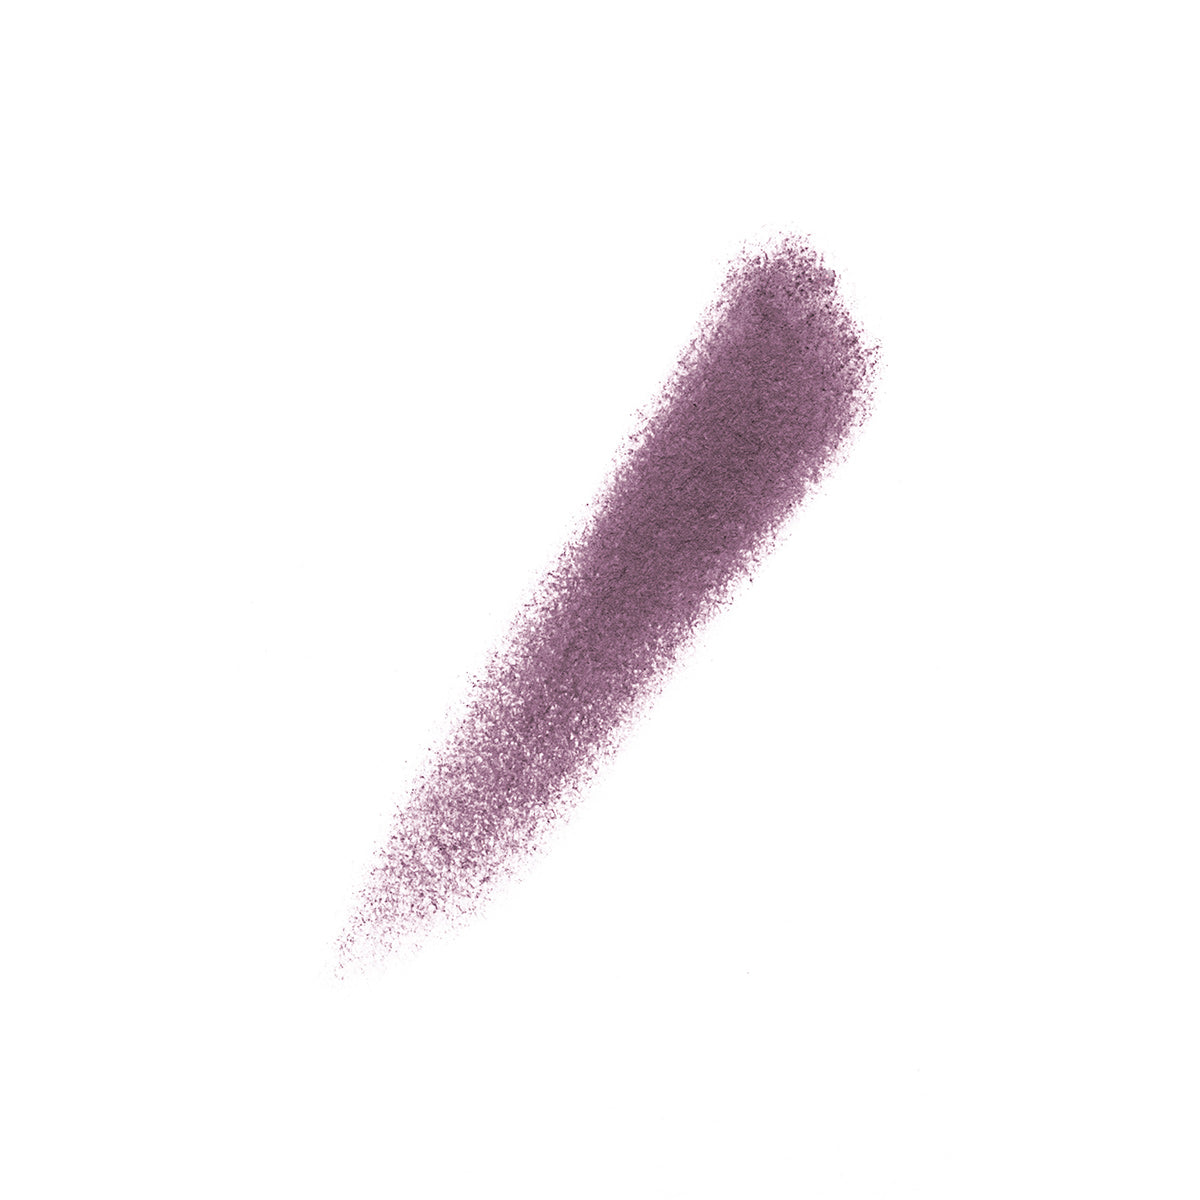 ELYSIAN - PURPLE - swatch of creamy pencil lipstick in deep purple